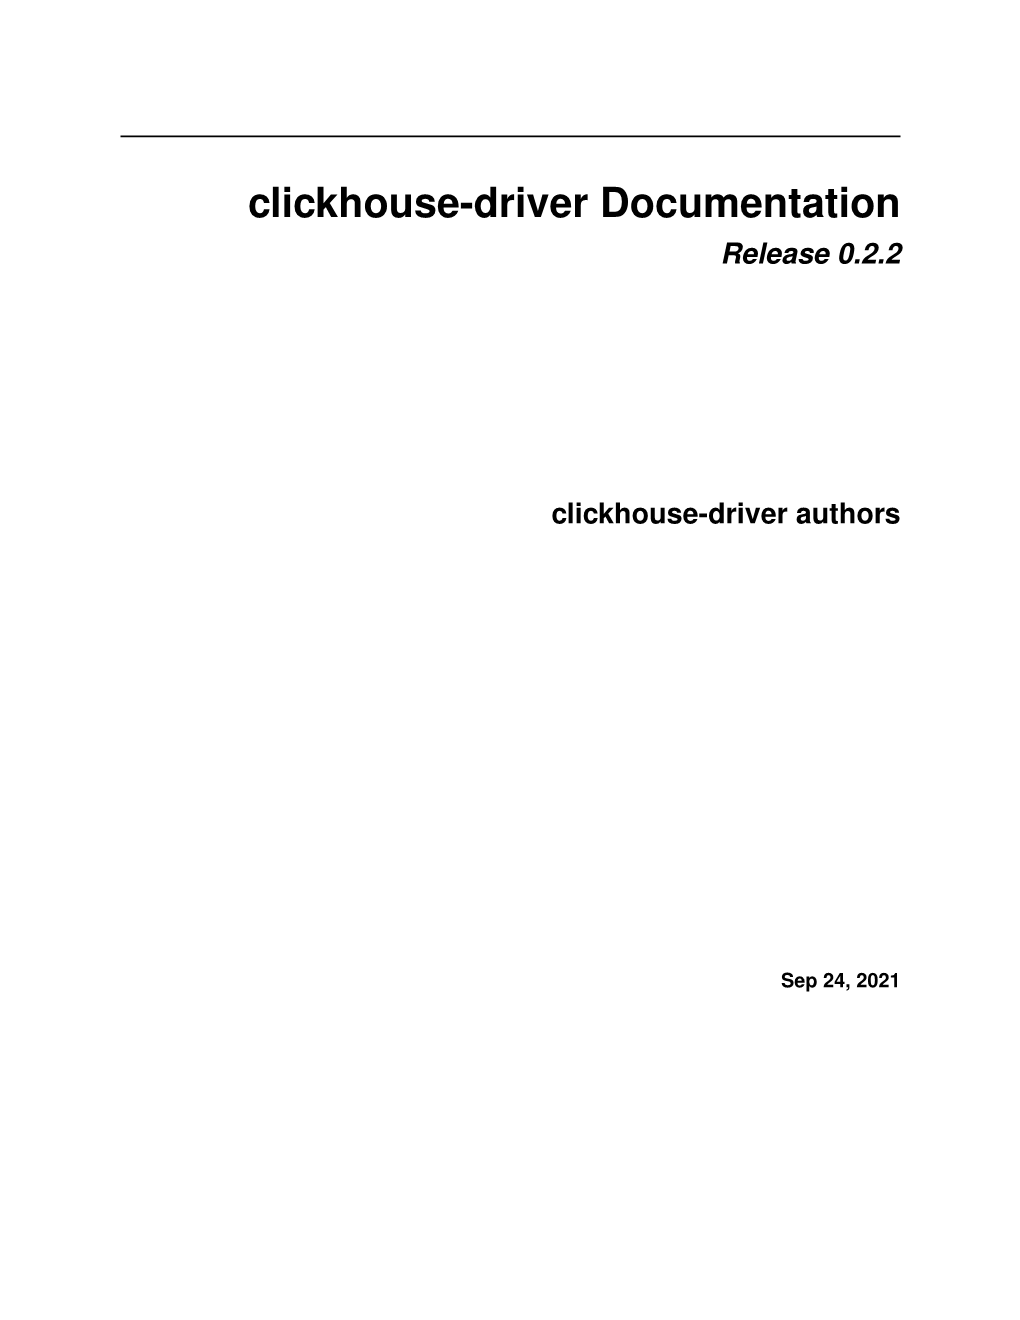 Clickhouse-Driver Documentation Release 0.2.2